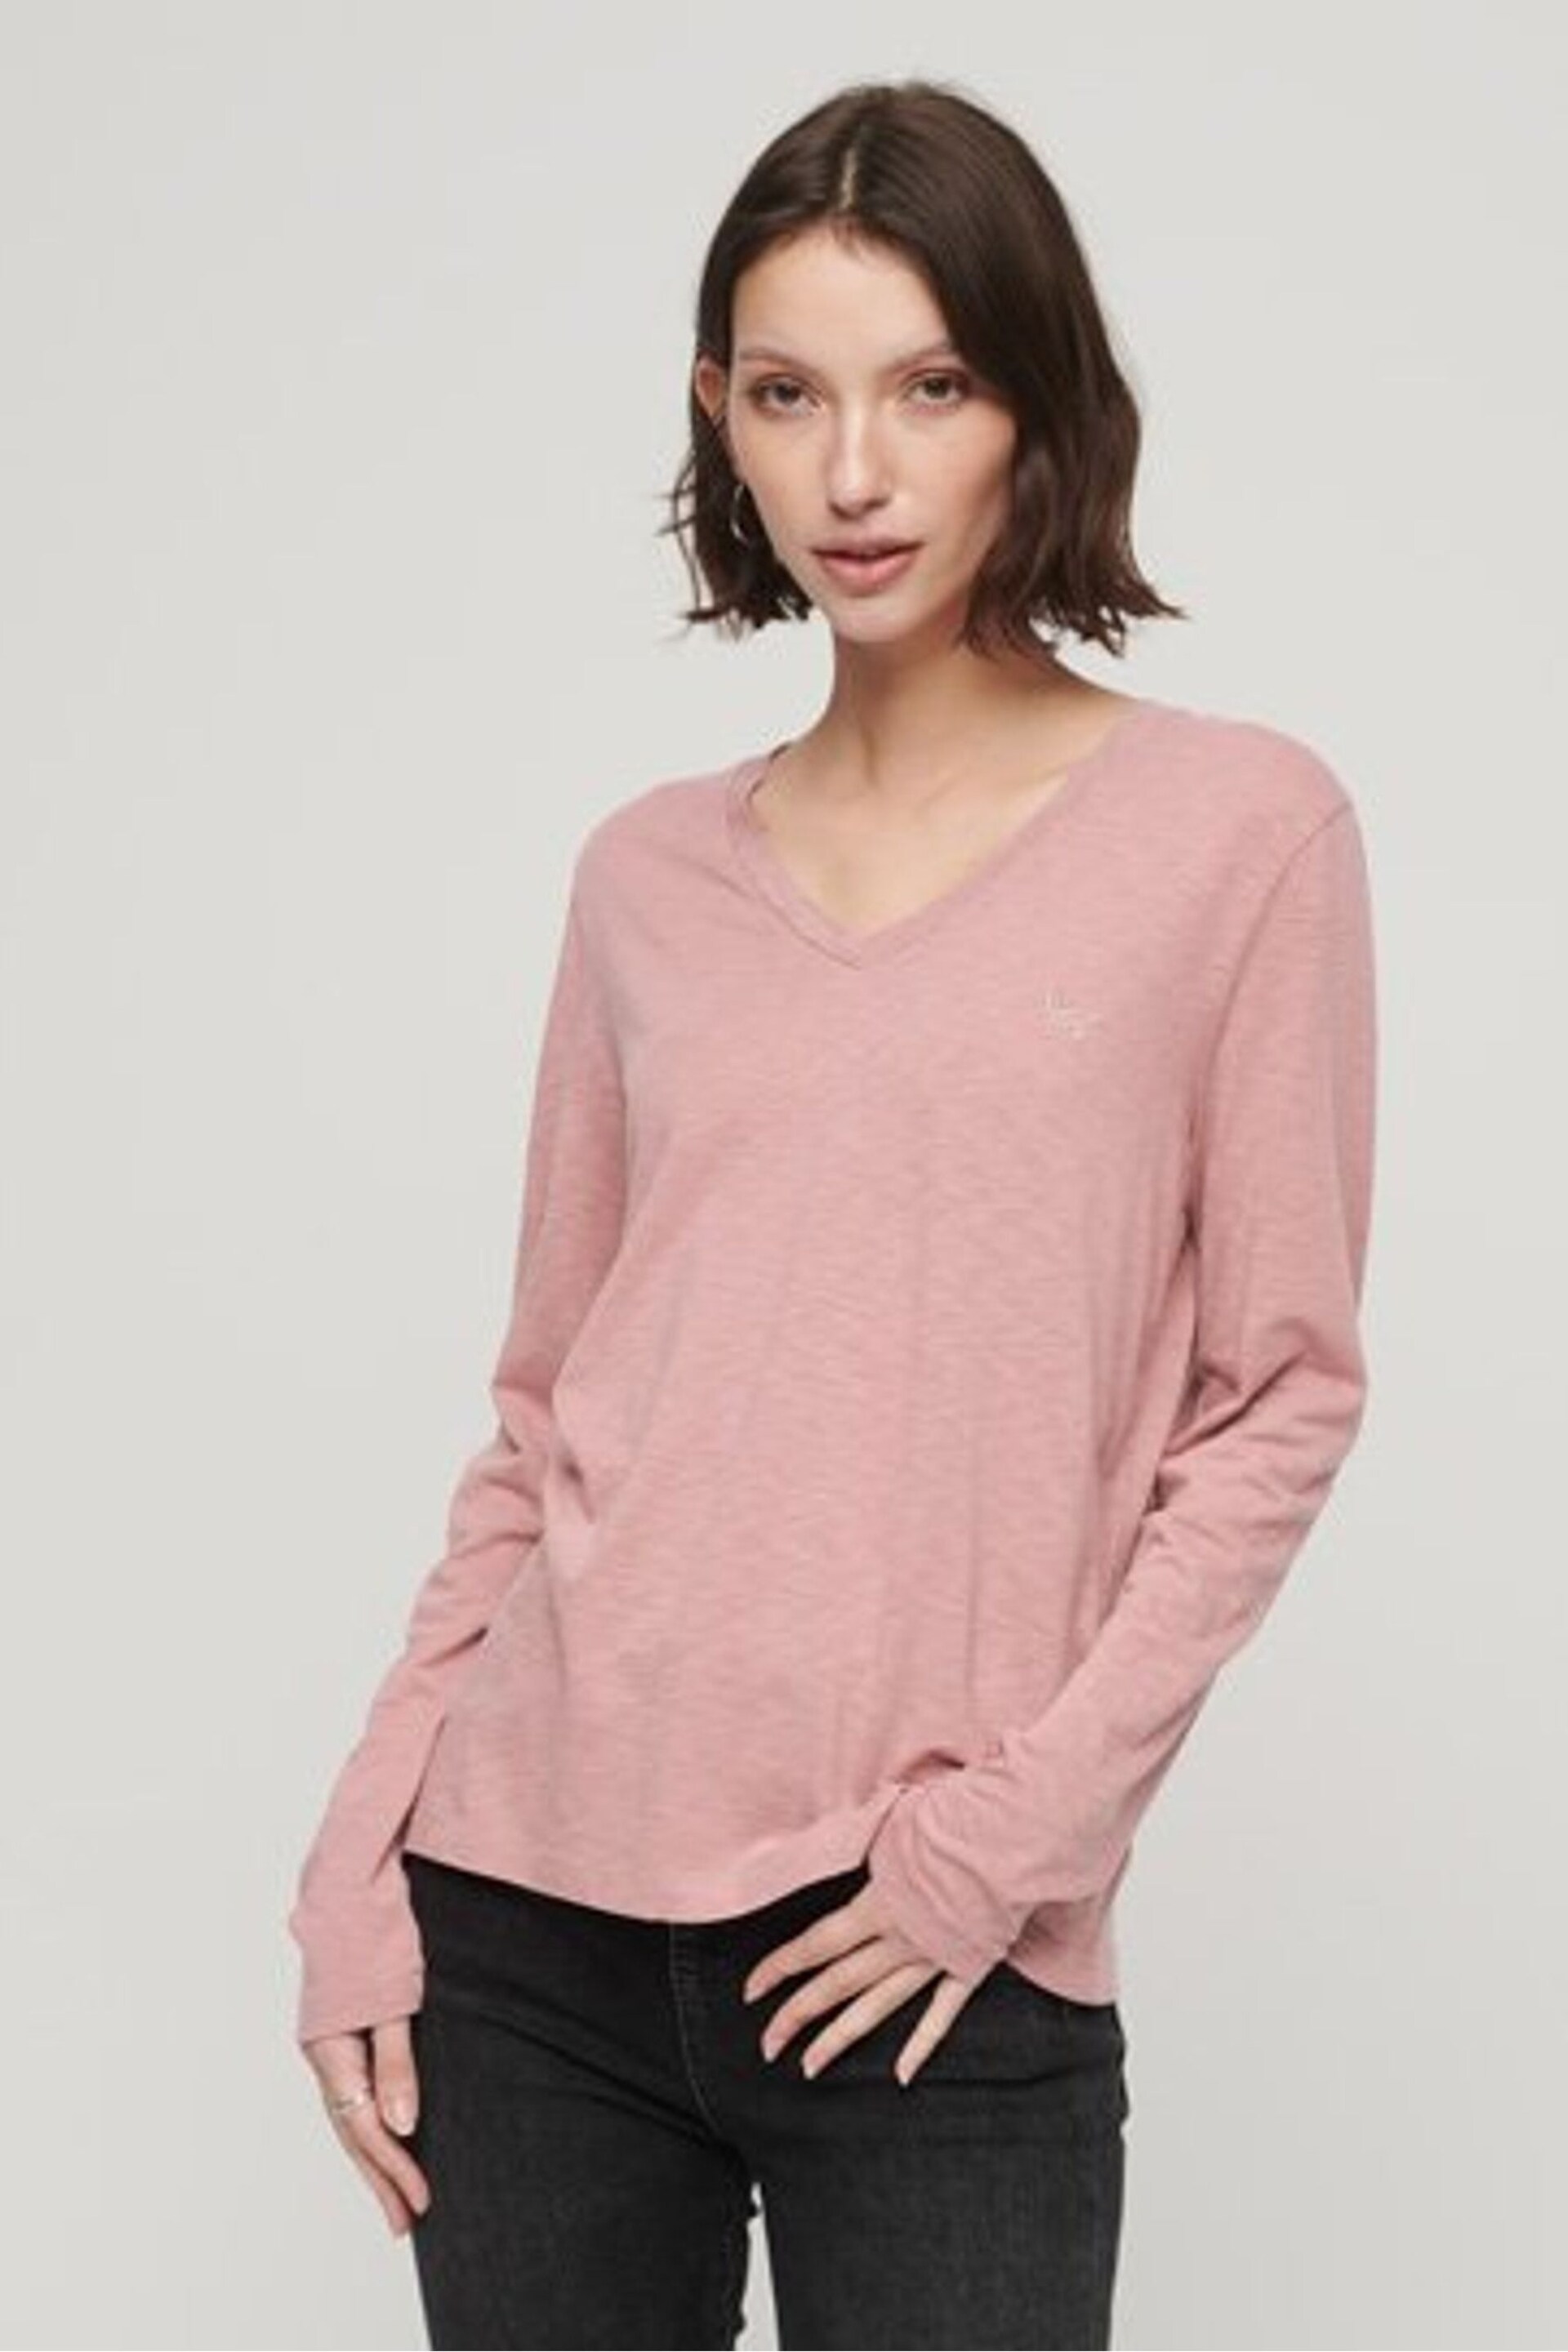 Superdry Pink Long Sleeve Jersey V-Neck Top - Image 1 of 6